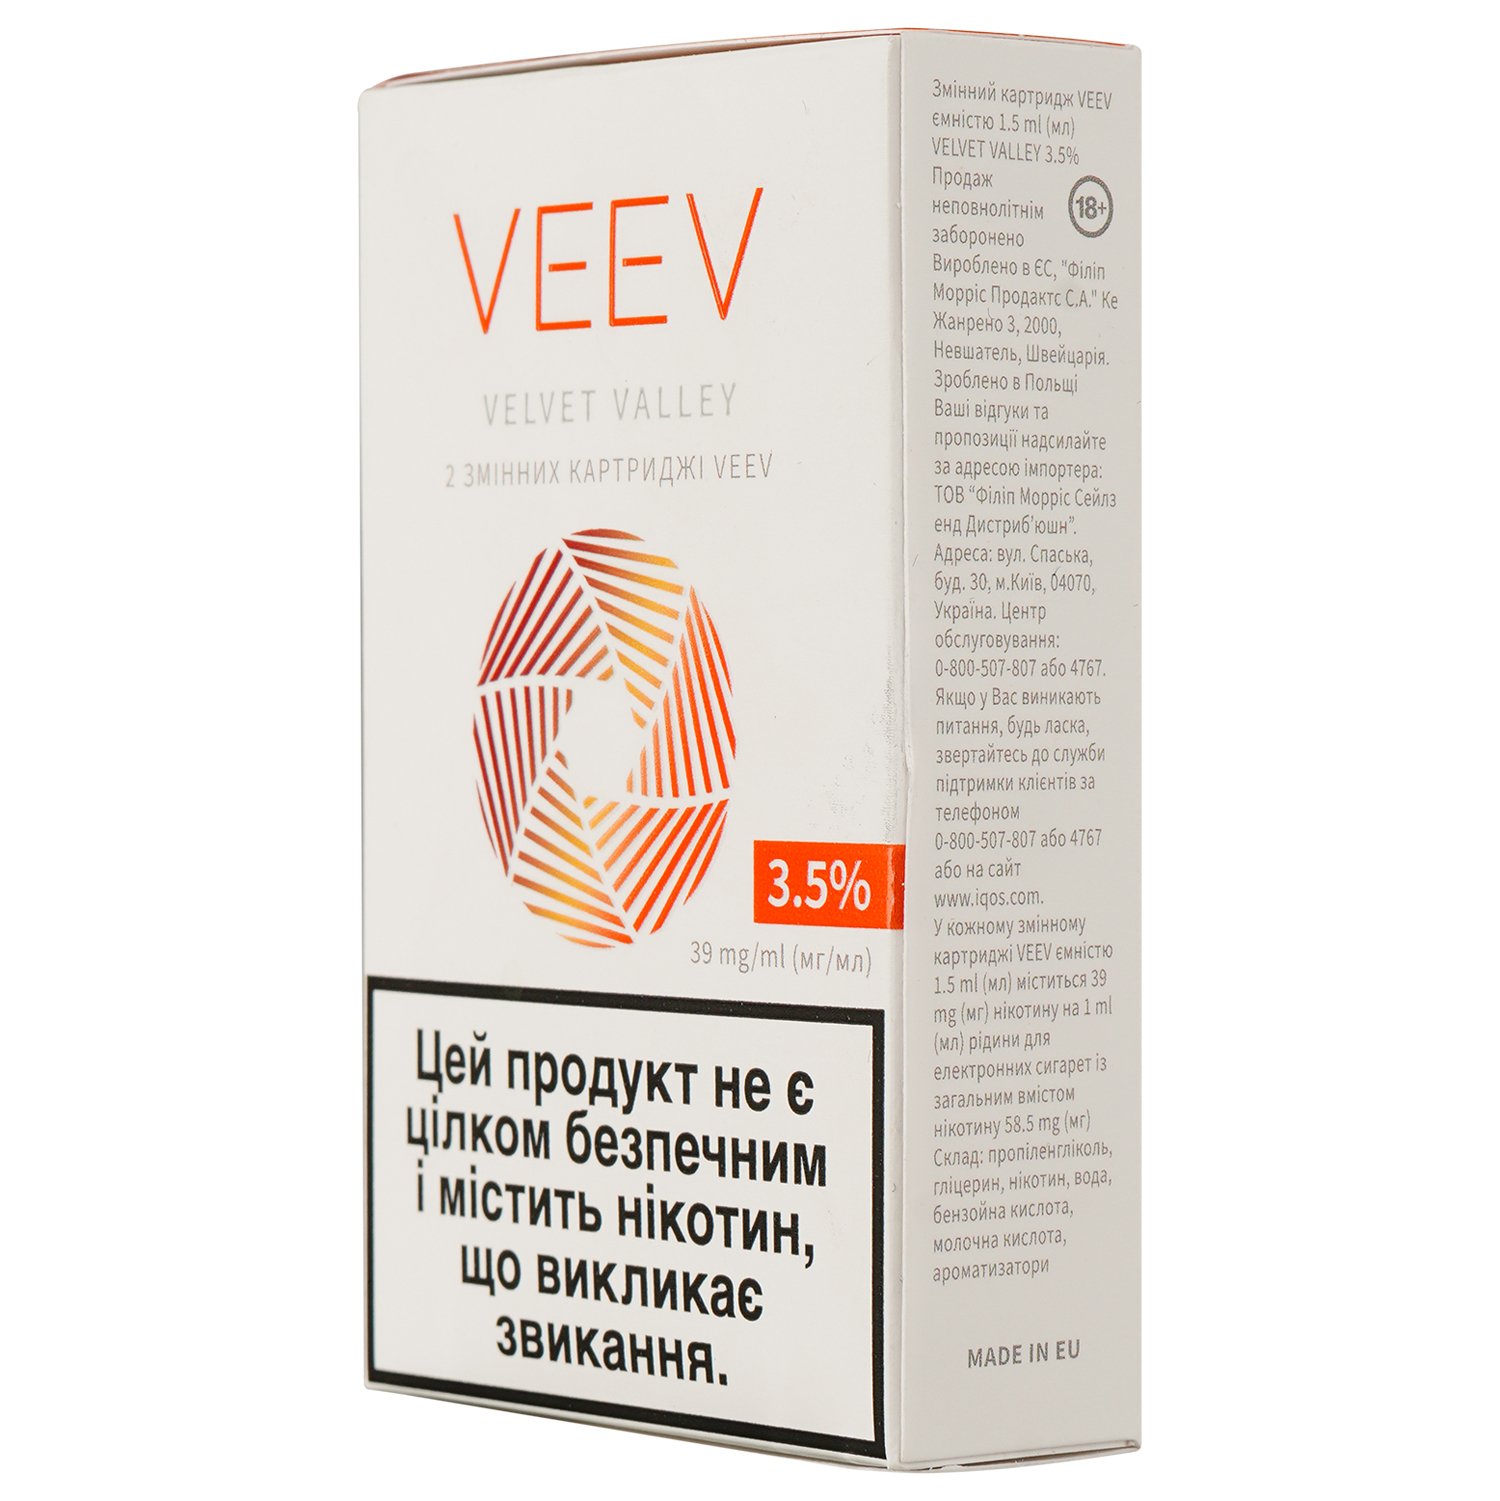 Картридж для POD систем Veev Velvet Valley, 3,5%, 2 шт. - фото 3